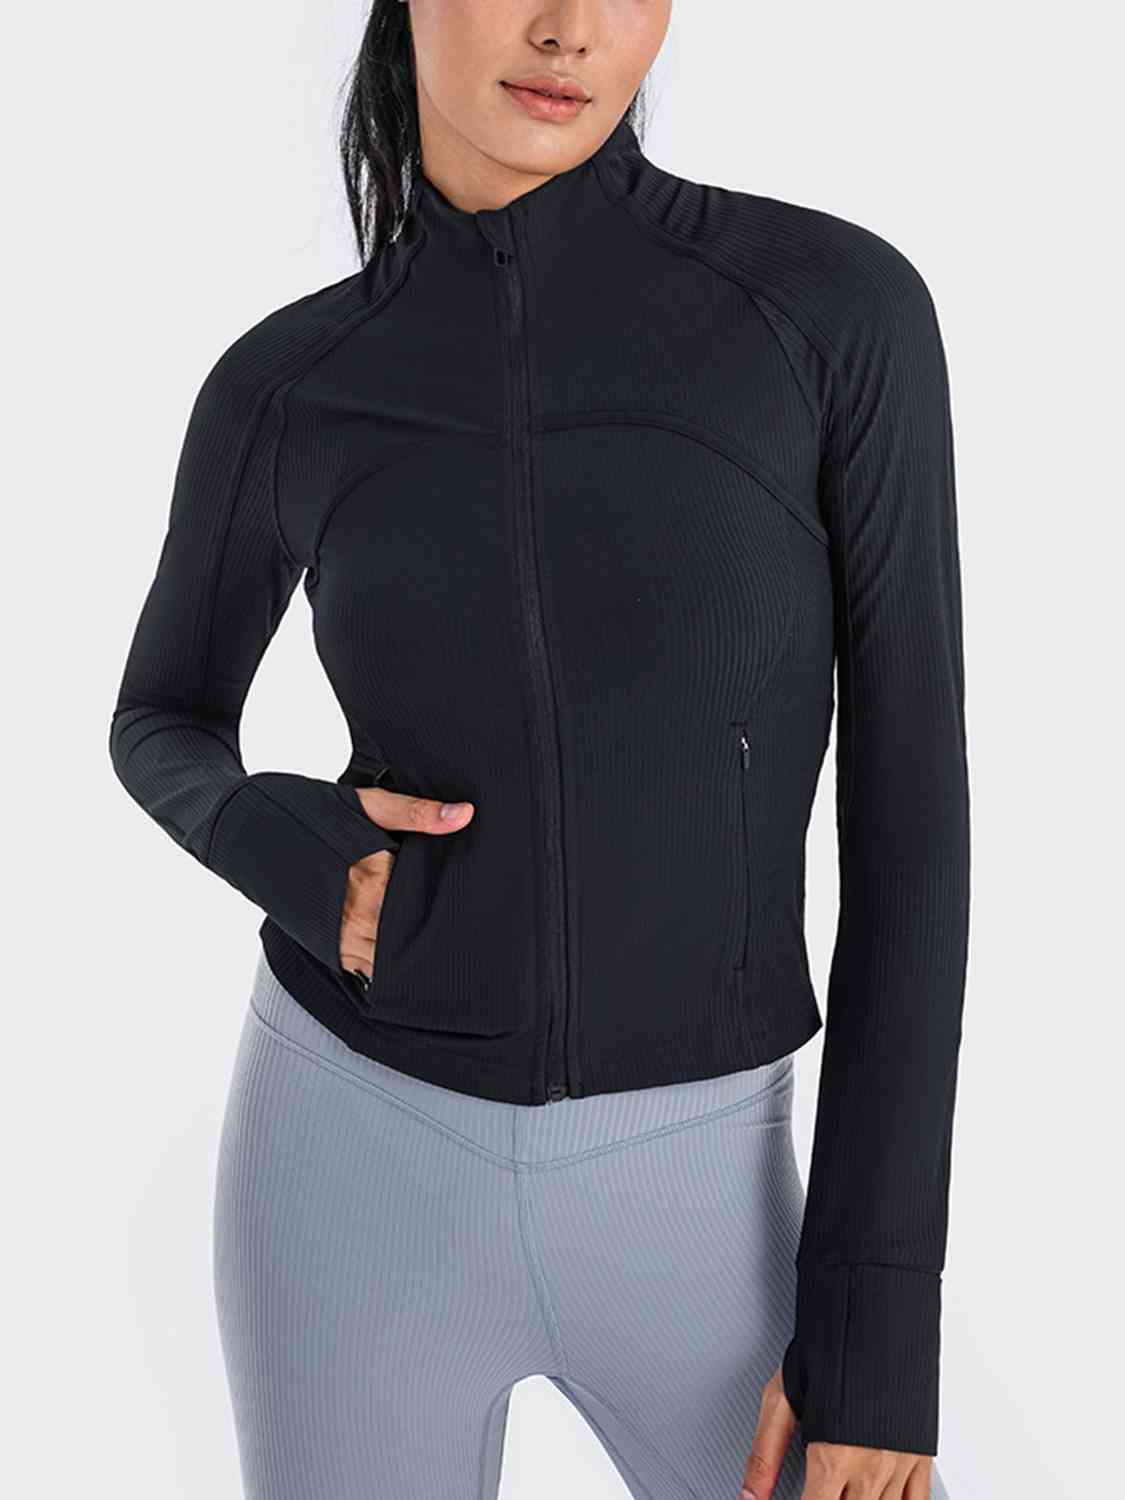 Zip-Up Long Sleeve Sports Jacket Black